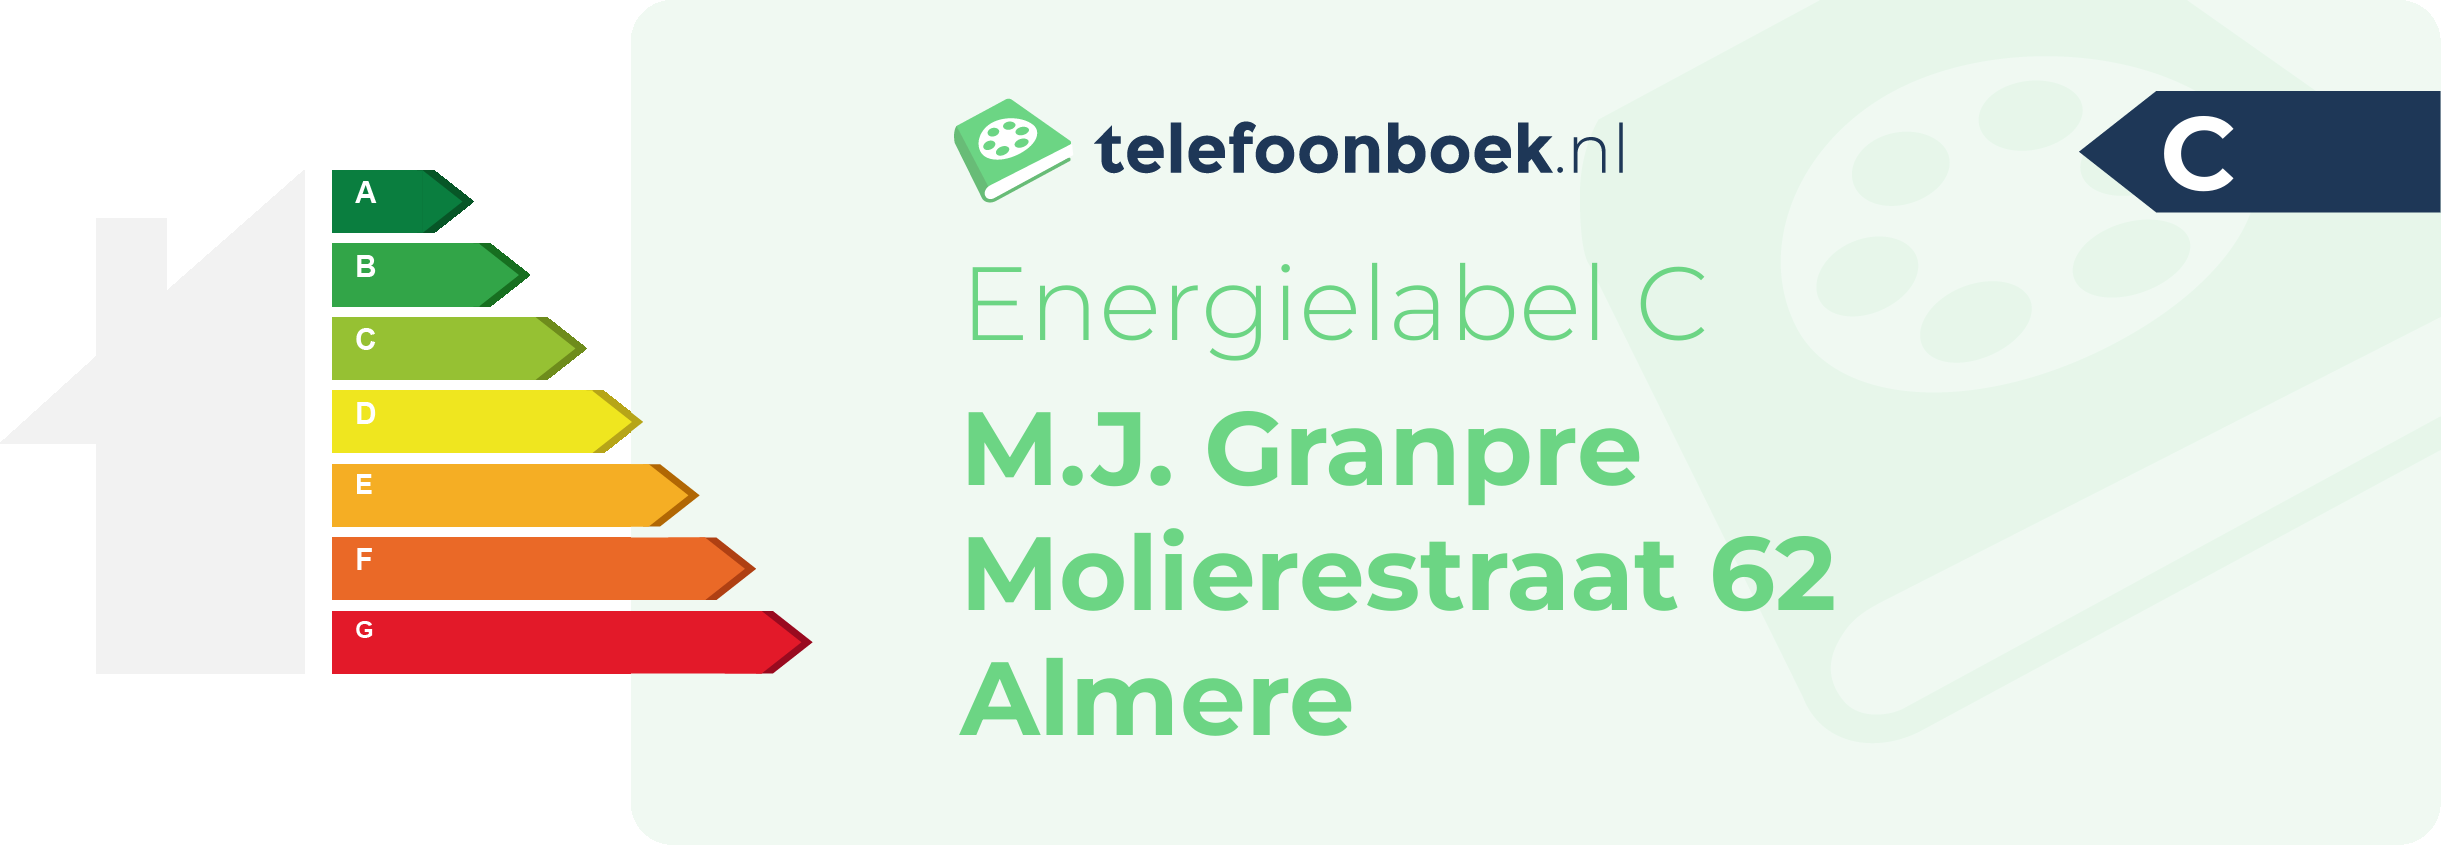 Energielabel M.J. Granpre Molierestraat 62 Almere